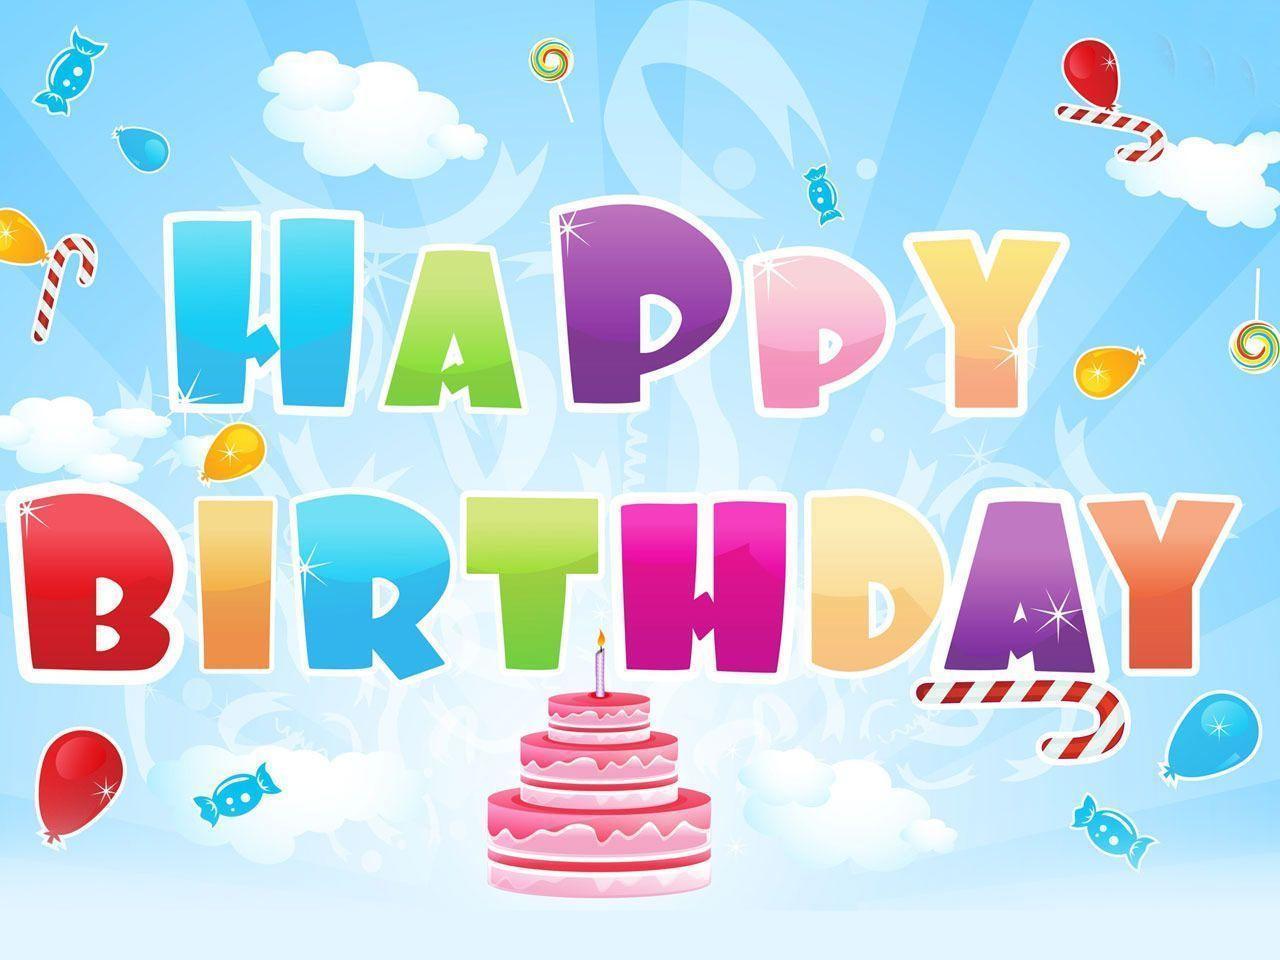 Beautiful Happy Birthday HD Wallpaper Image Wallpaper